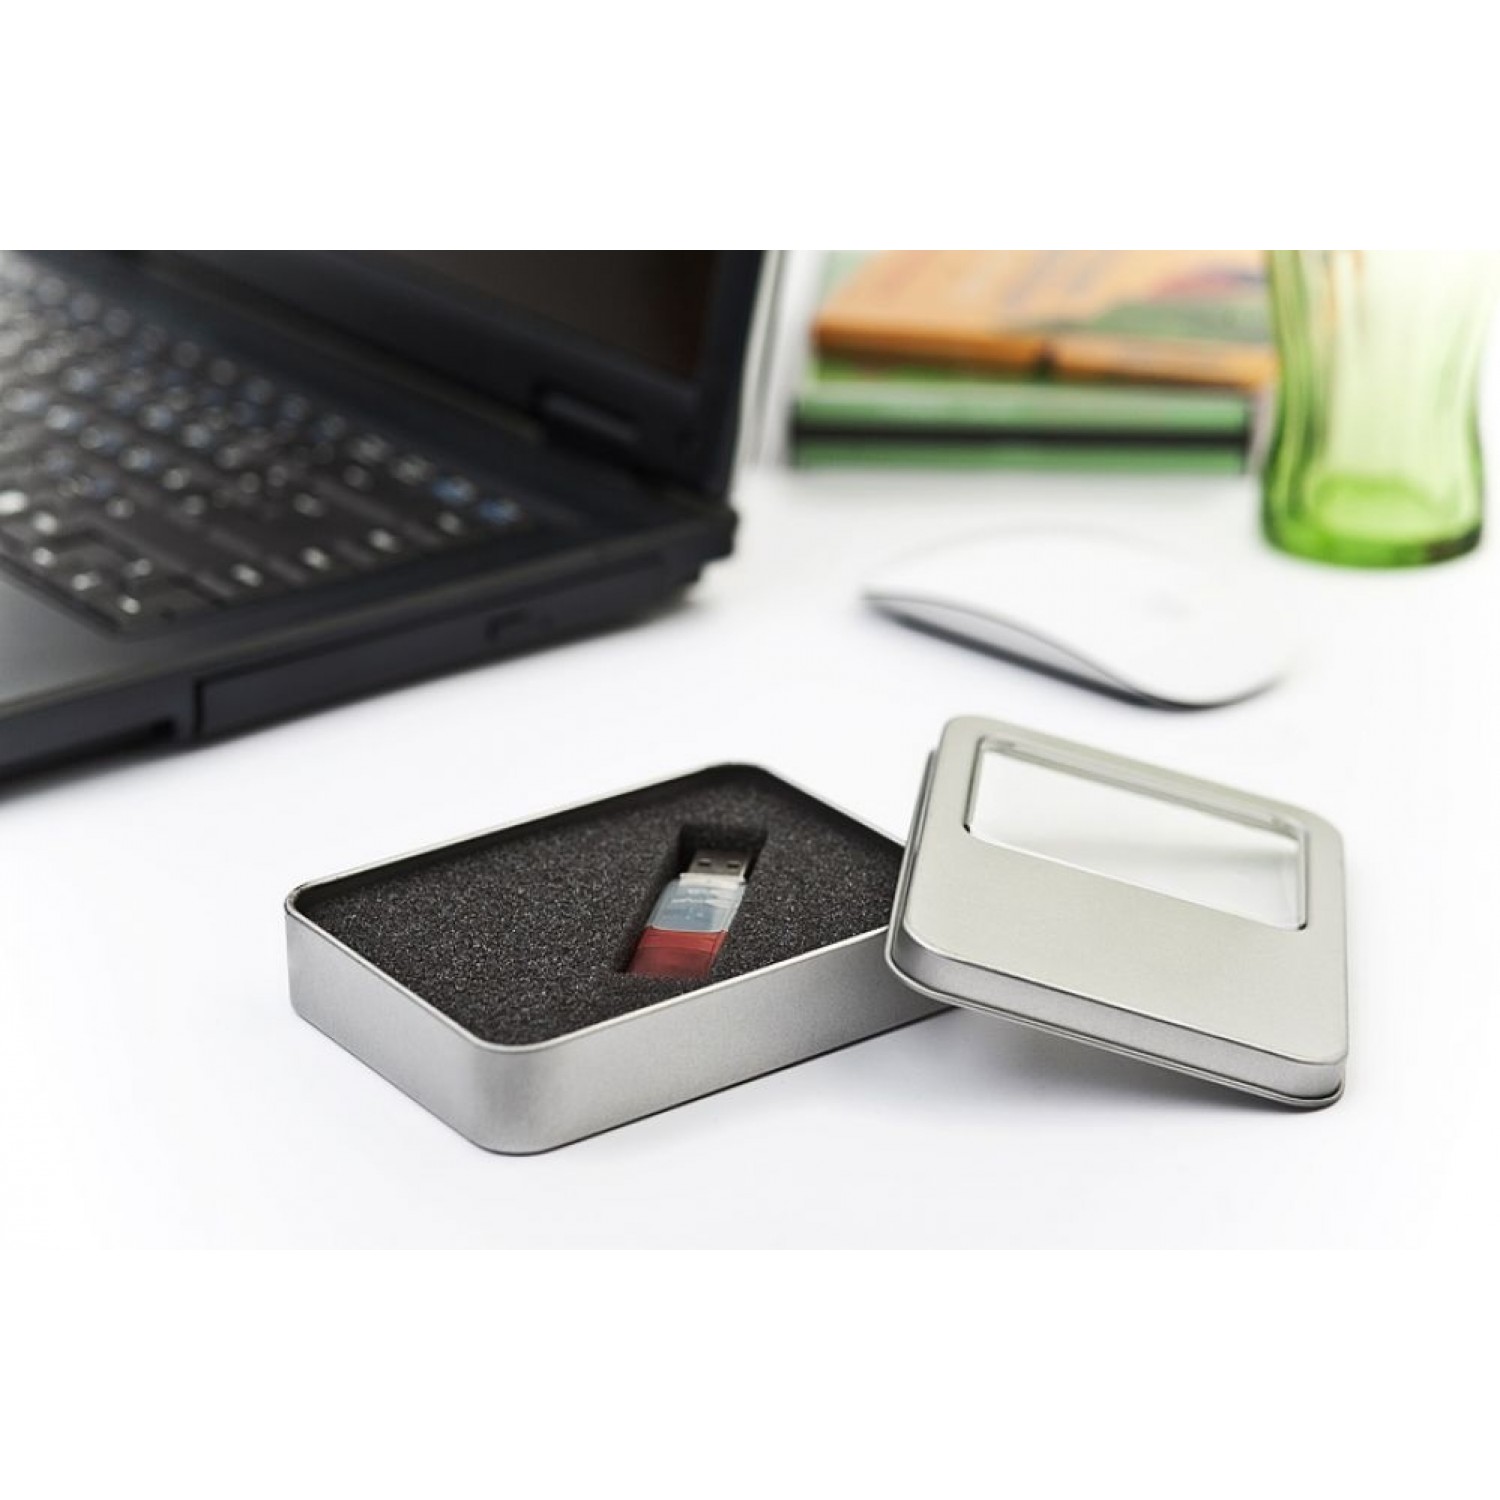 USB Memory Stick Tin Case - USB gift box » Tindobo